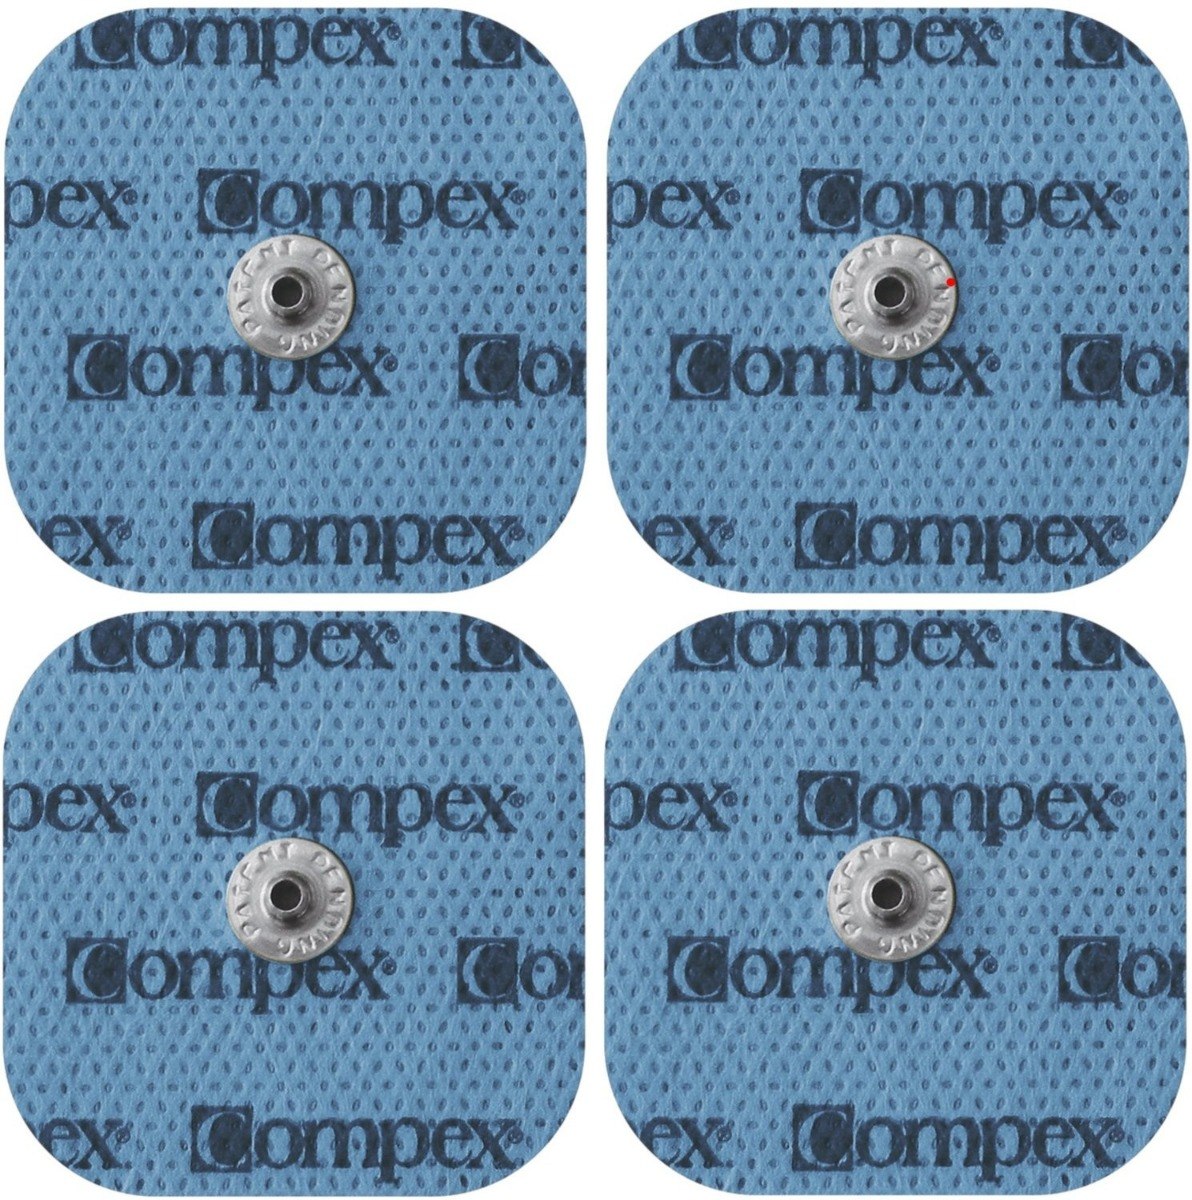 8 Electrodos Parches Pads 5x5 Snap Compatible Con Compex